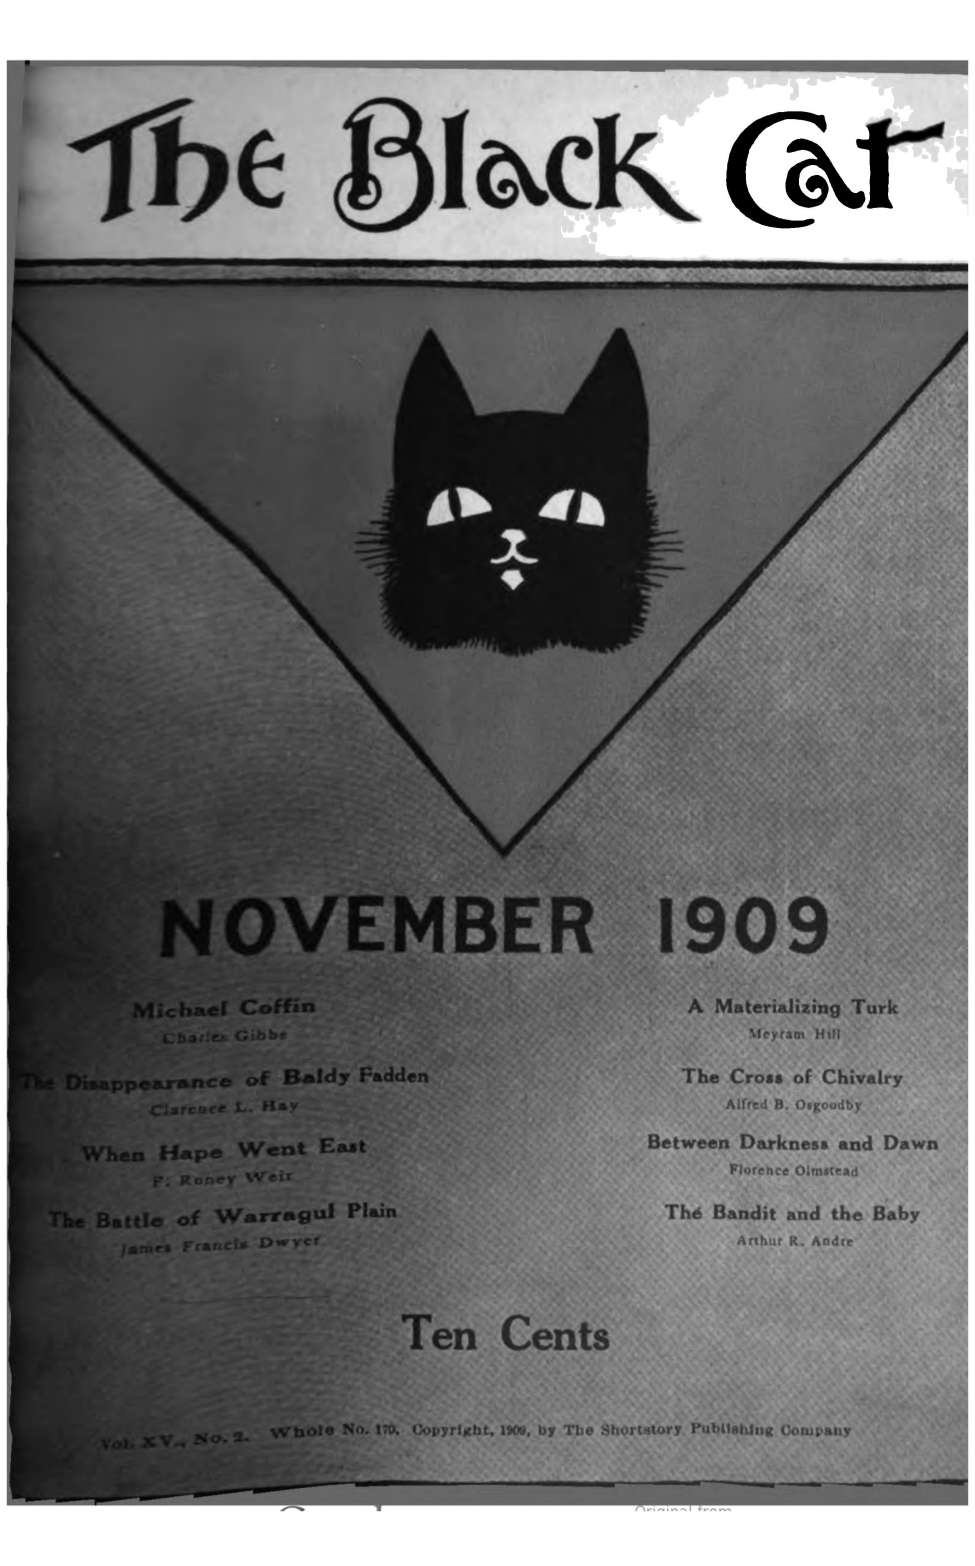 Book Cover For The Black Cat v15 2 - Michael Coffin - Charles Gibbs